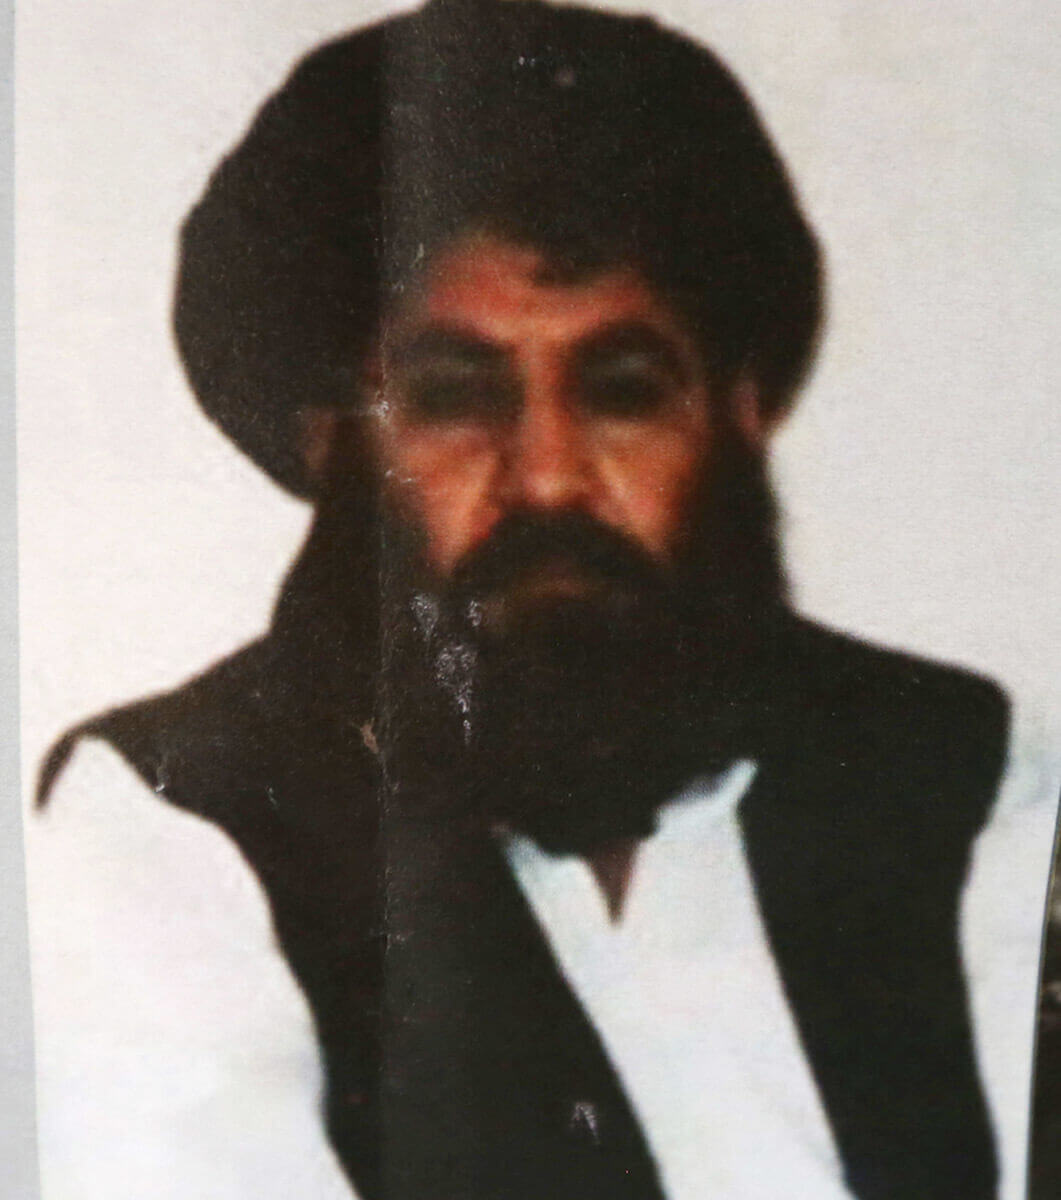 Image of previous Afghan Taliban leader Mullah Akhtar Muhammad Mansour